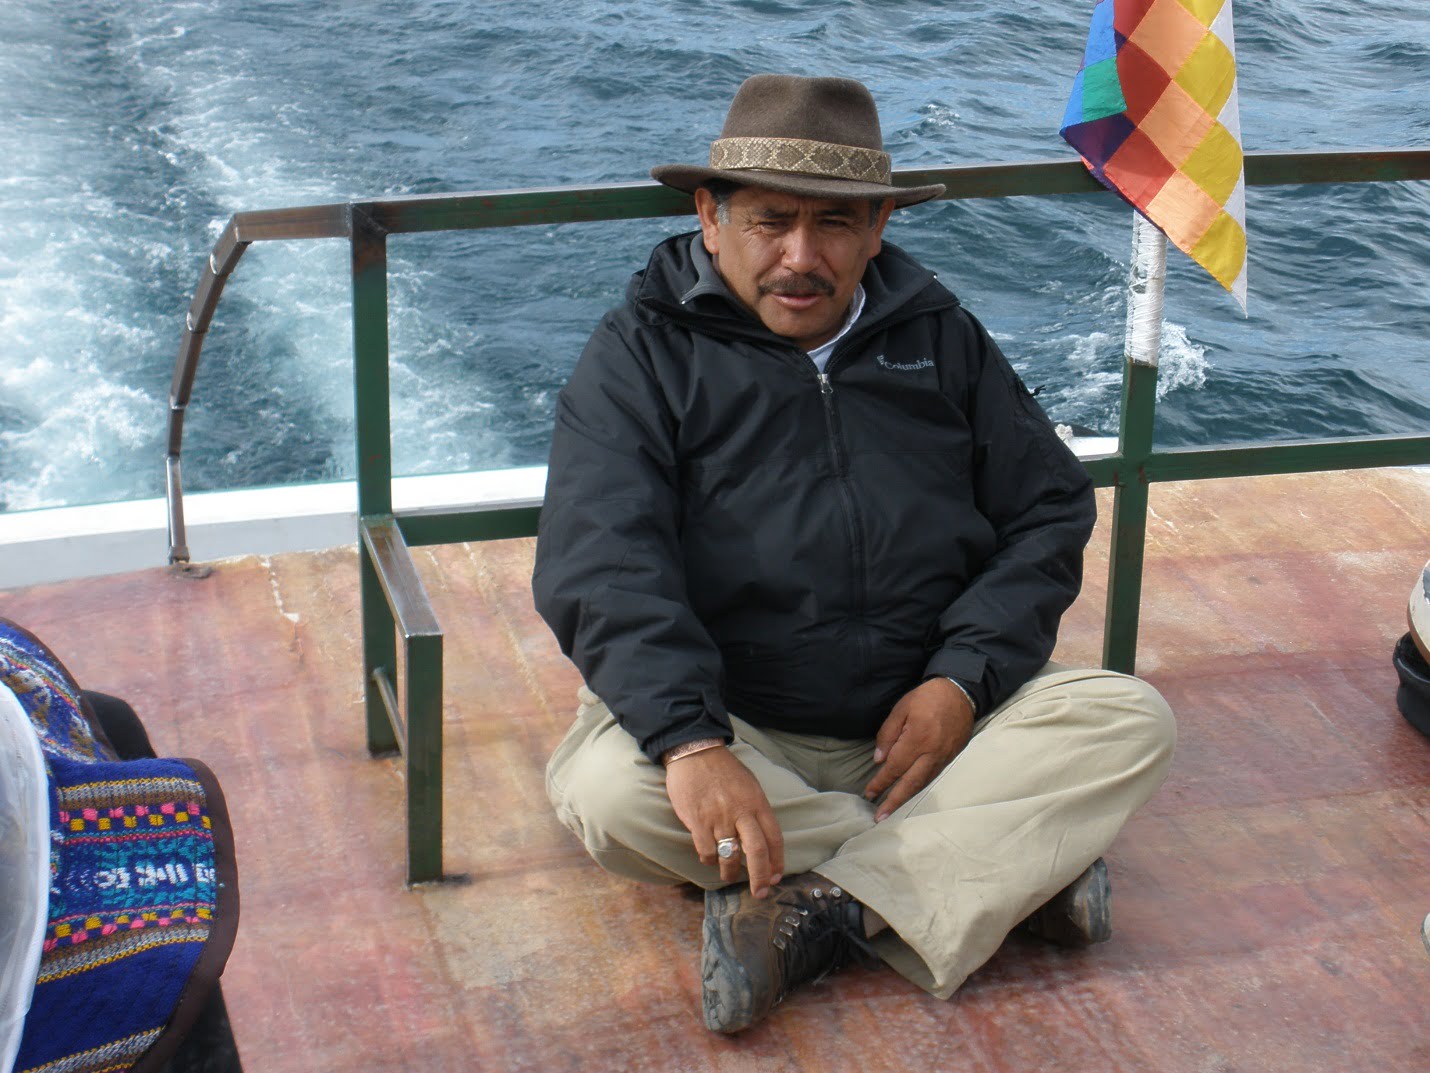 Our shaman guide on this adventure, Jorge Luis Delgado